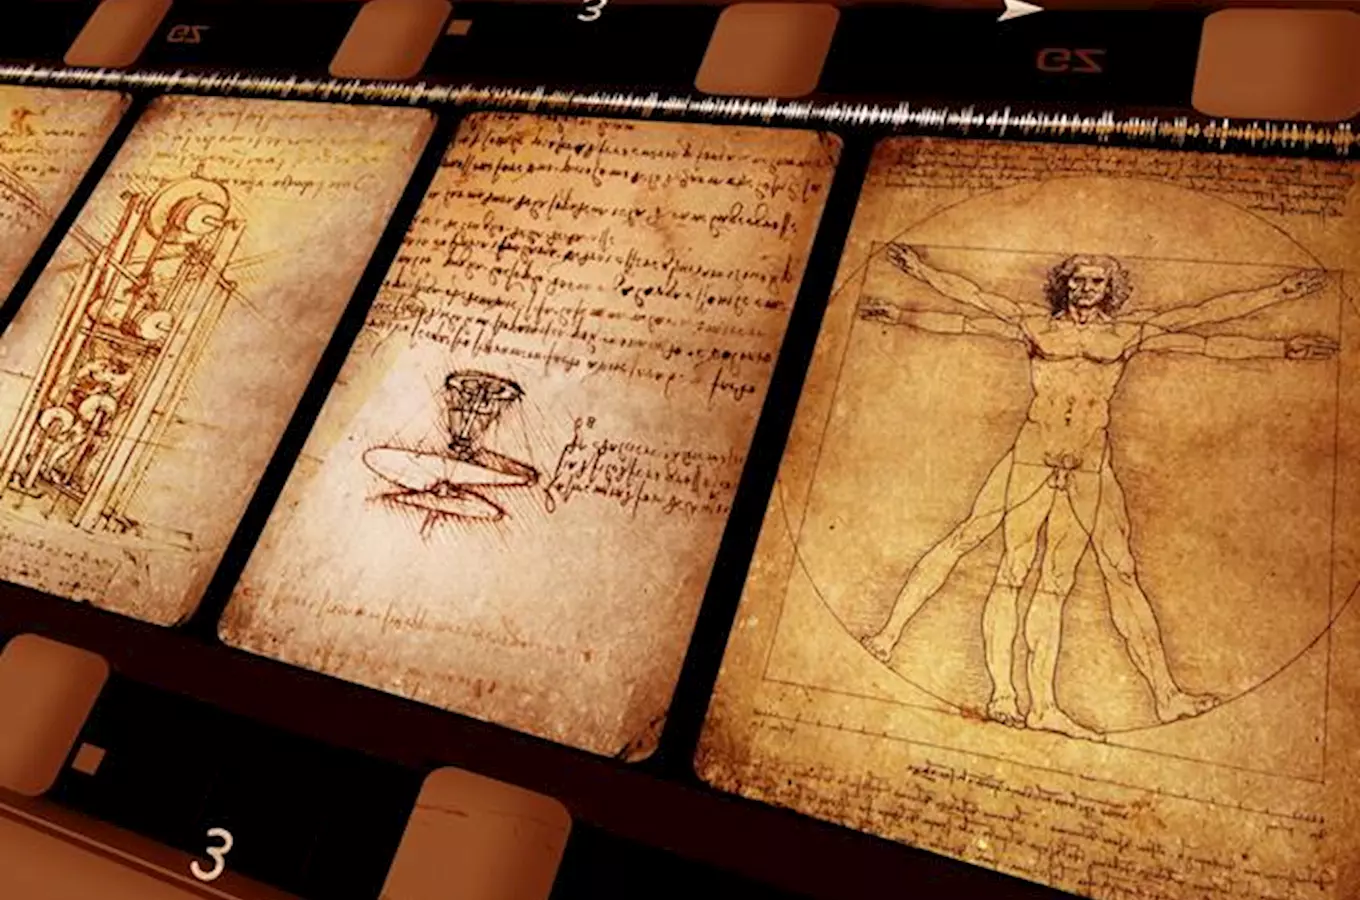 Leonardo da Vinci v Praze: přijďte za ním do Malostranské besedy